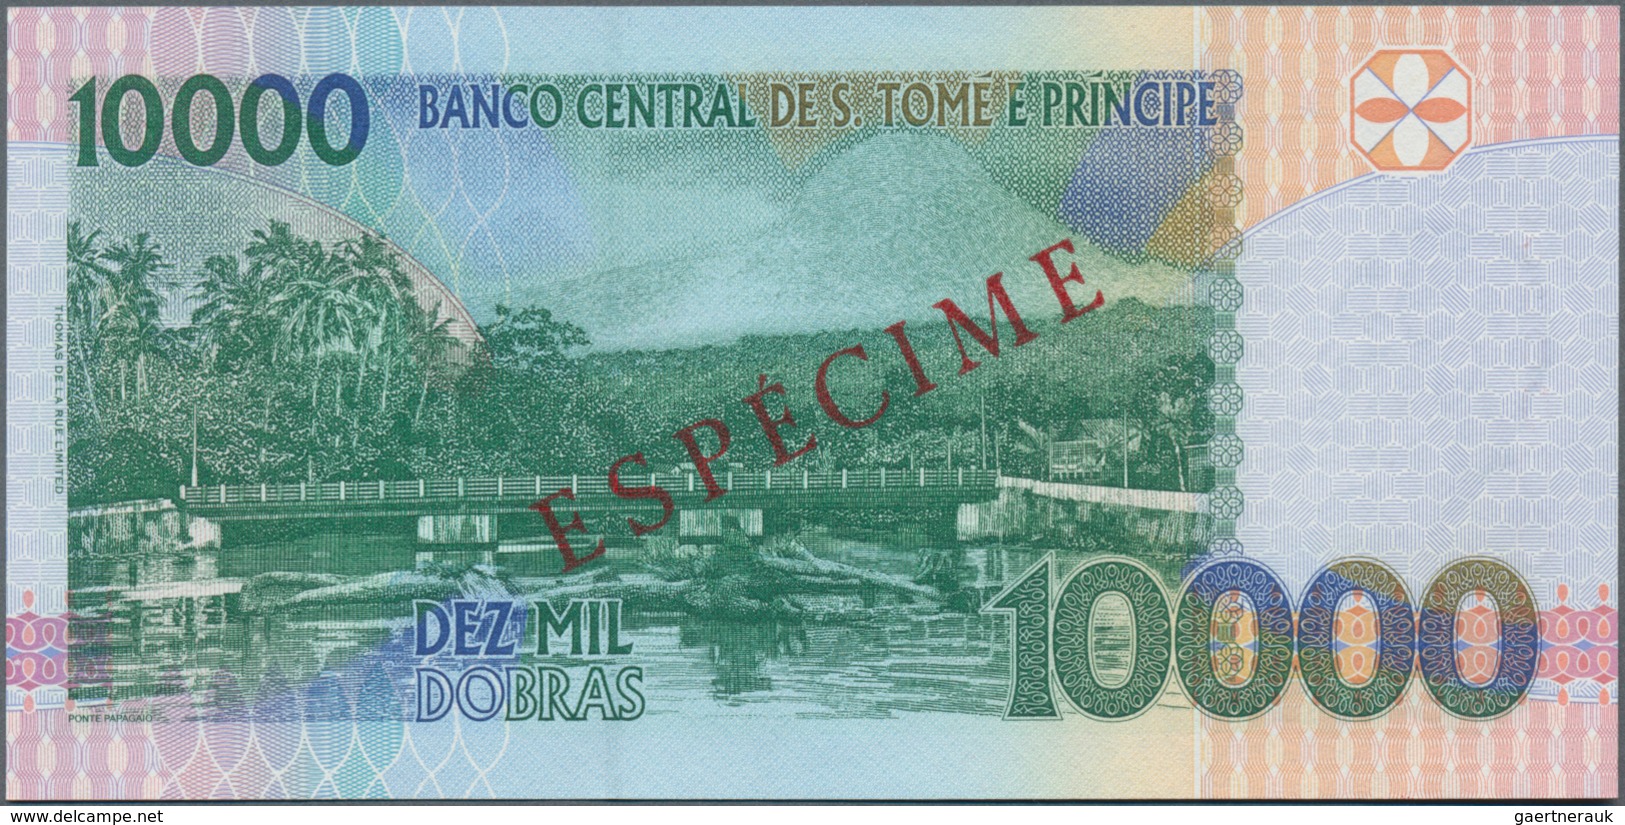 Saint Thomas & Prince / Sao Tome e Principe: Banco Central de S. Tomé e Príncipe set with 4 banknote